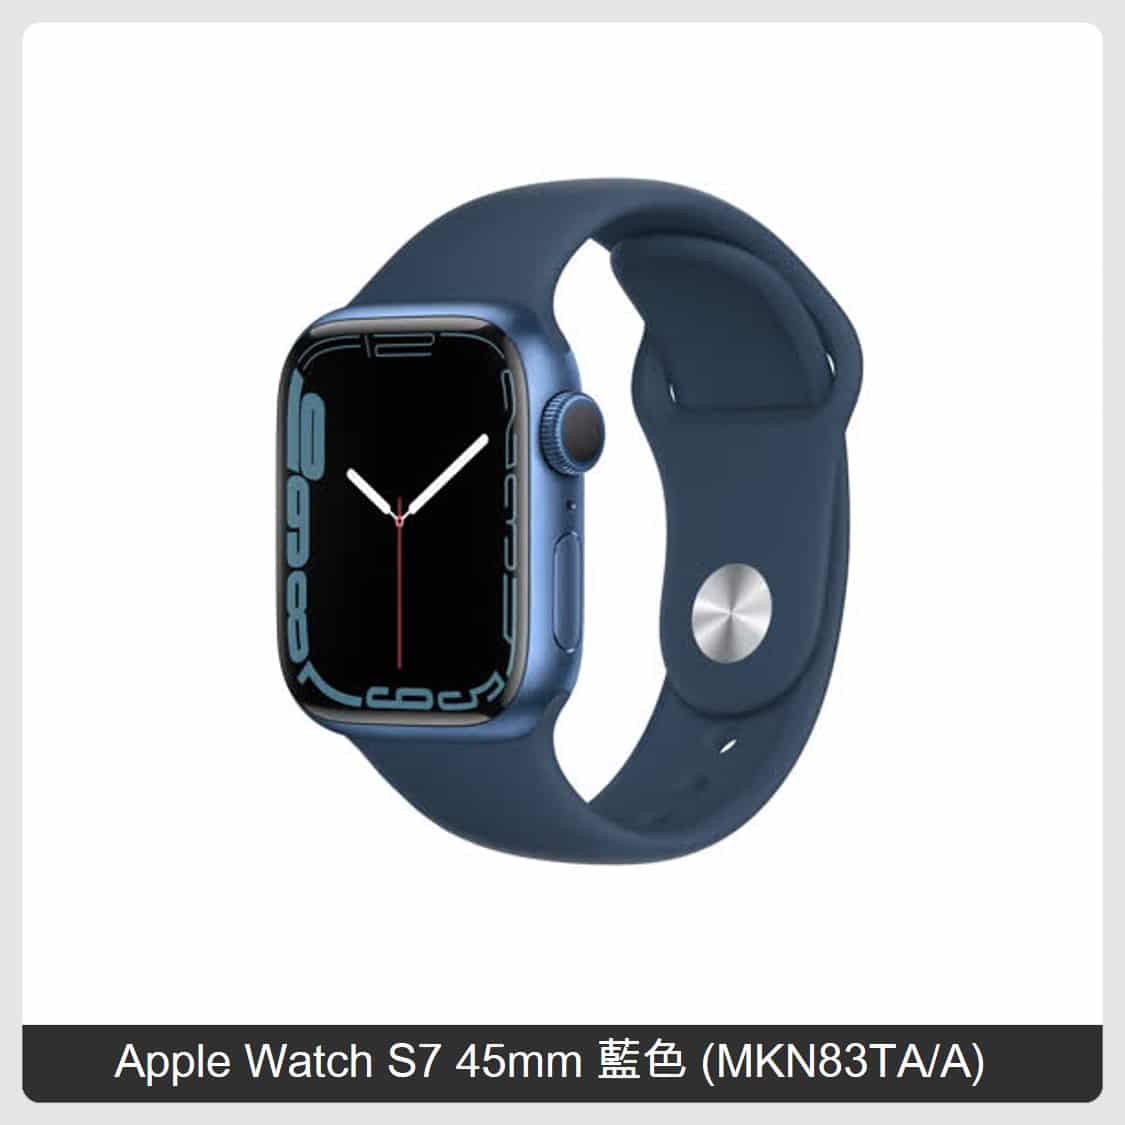 Apple Watch S7 45mm 藍色(MKN83TA/A) | 法雅客網路商店